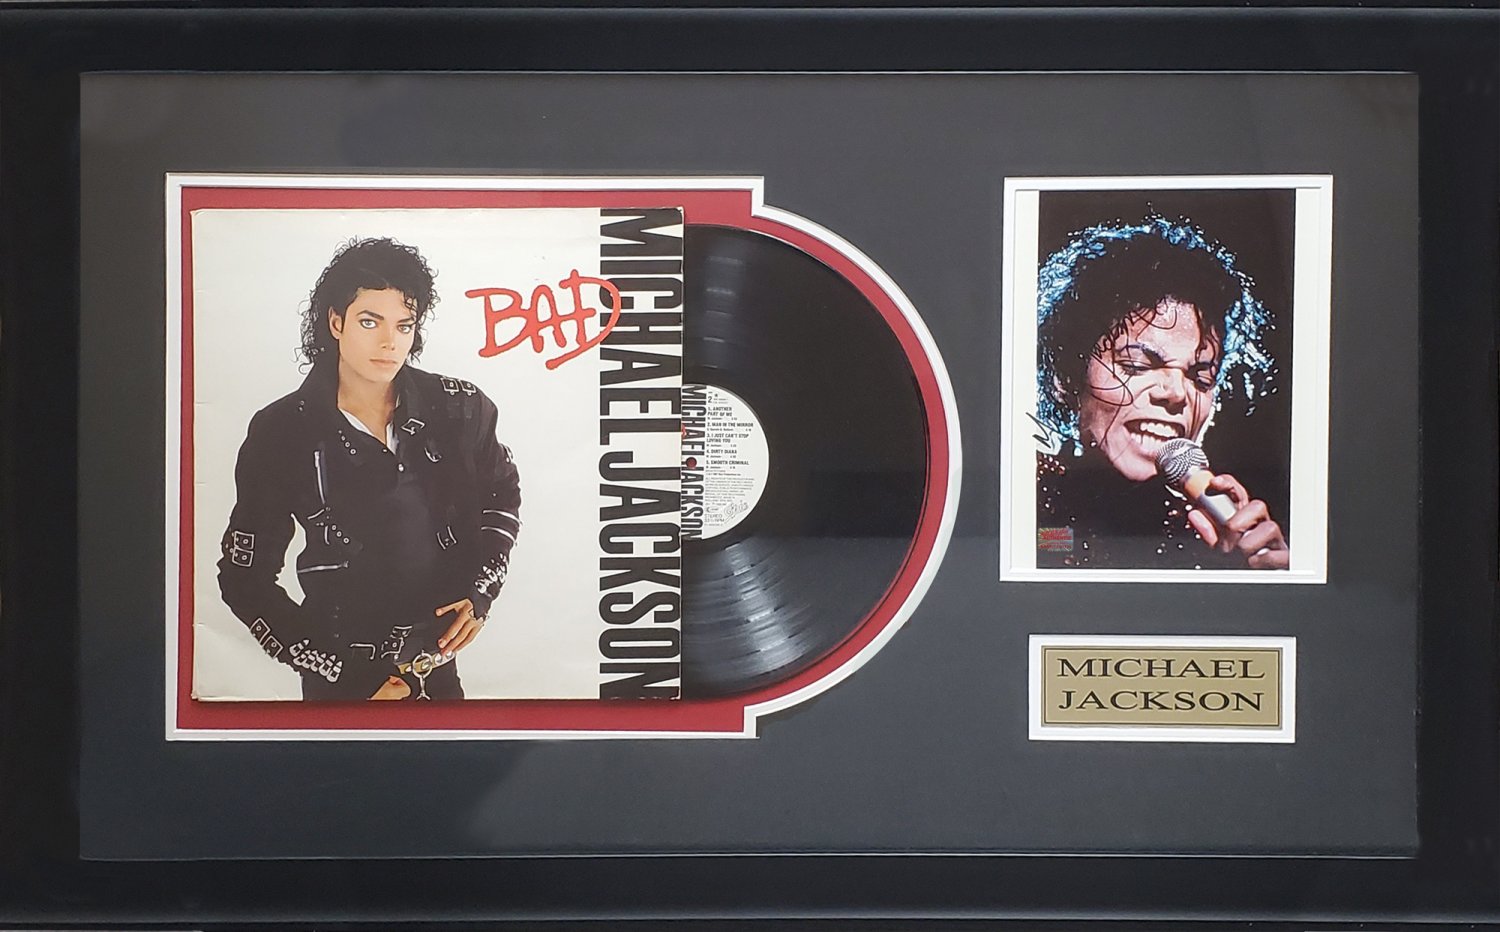 Michael Jackson Signed 8x10 Photo Framed with Bad Album